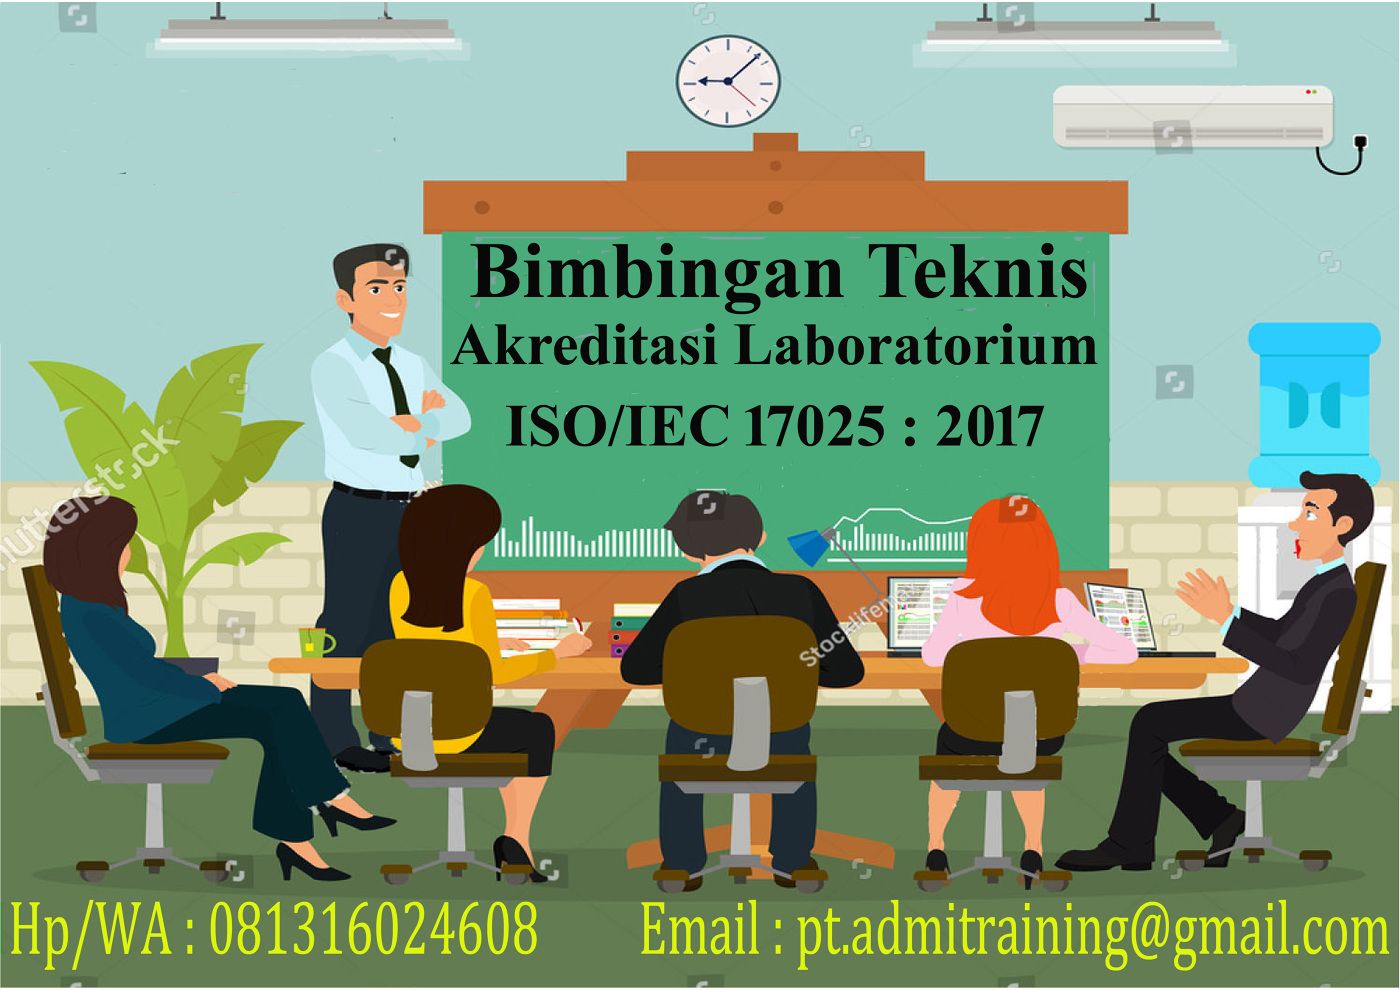 Bimbingan Teknis Akreditasi Laboratorium Penguji Sesuai ISO/IEC 17025 : 2017